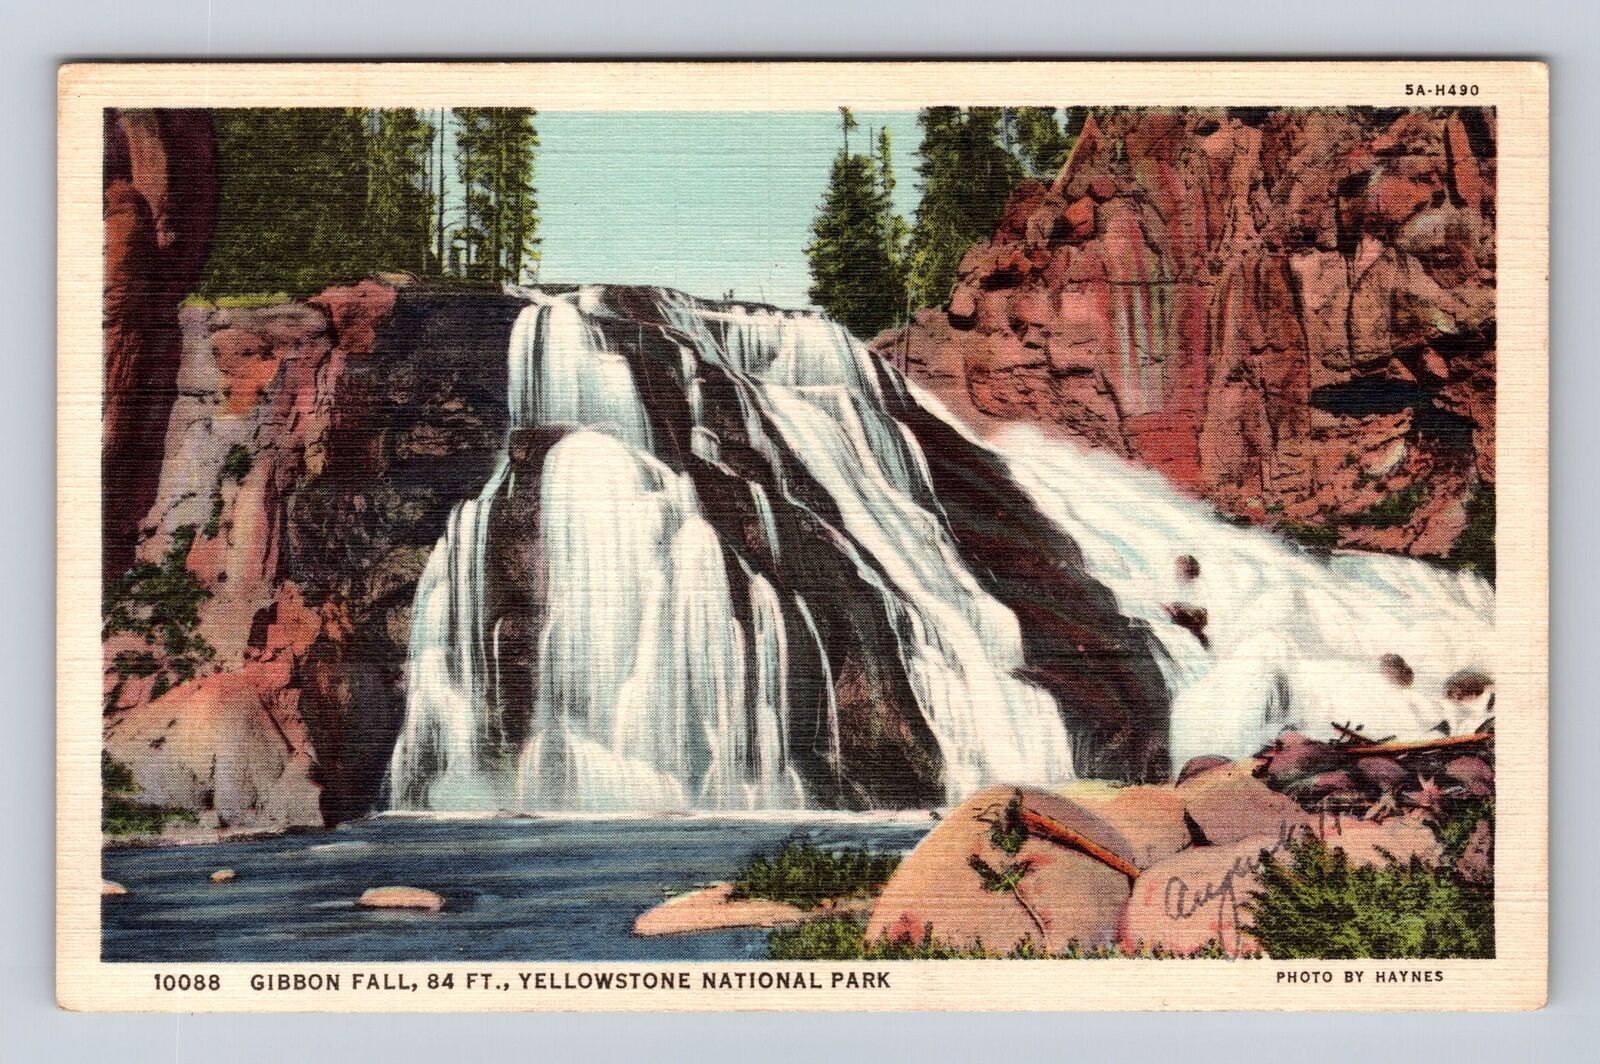 Yellowstone National Park, Gibbon Fall, Series #10088, Vintage Souvenir Postcard